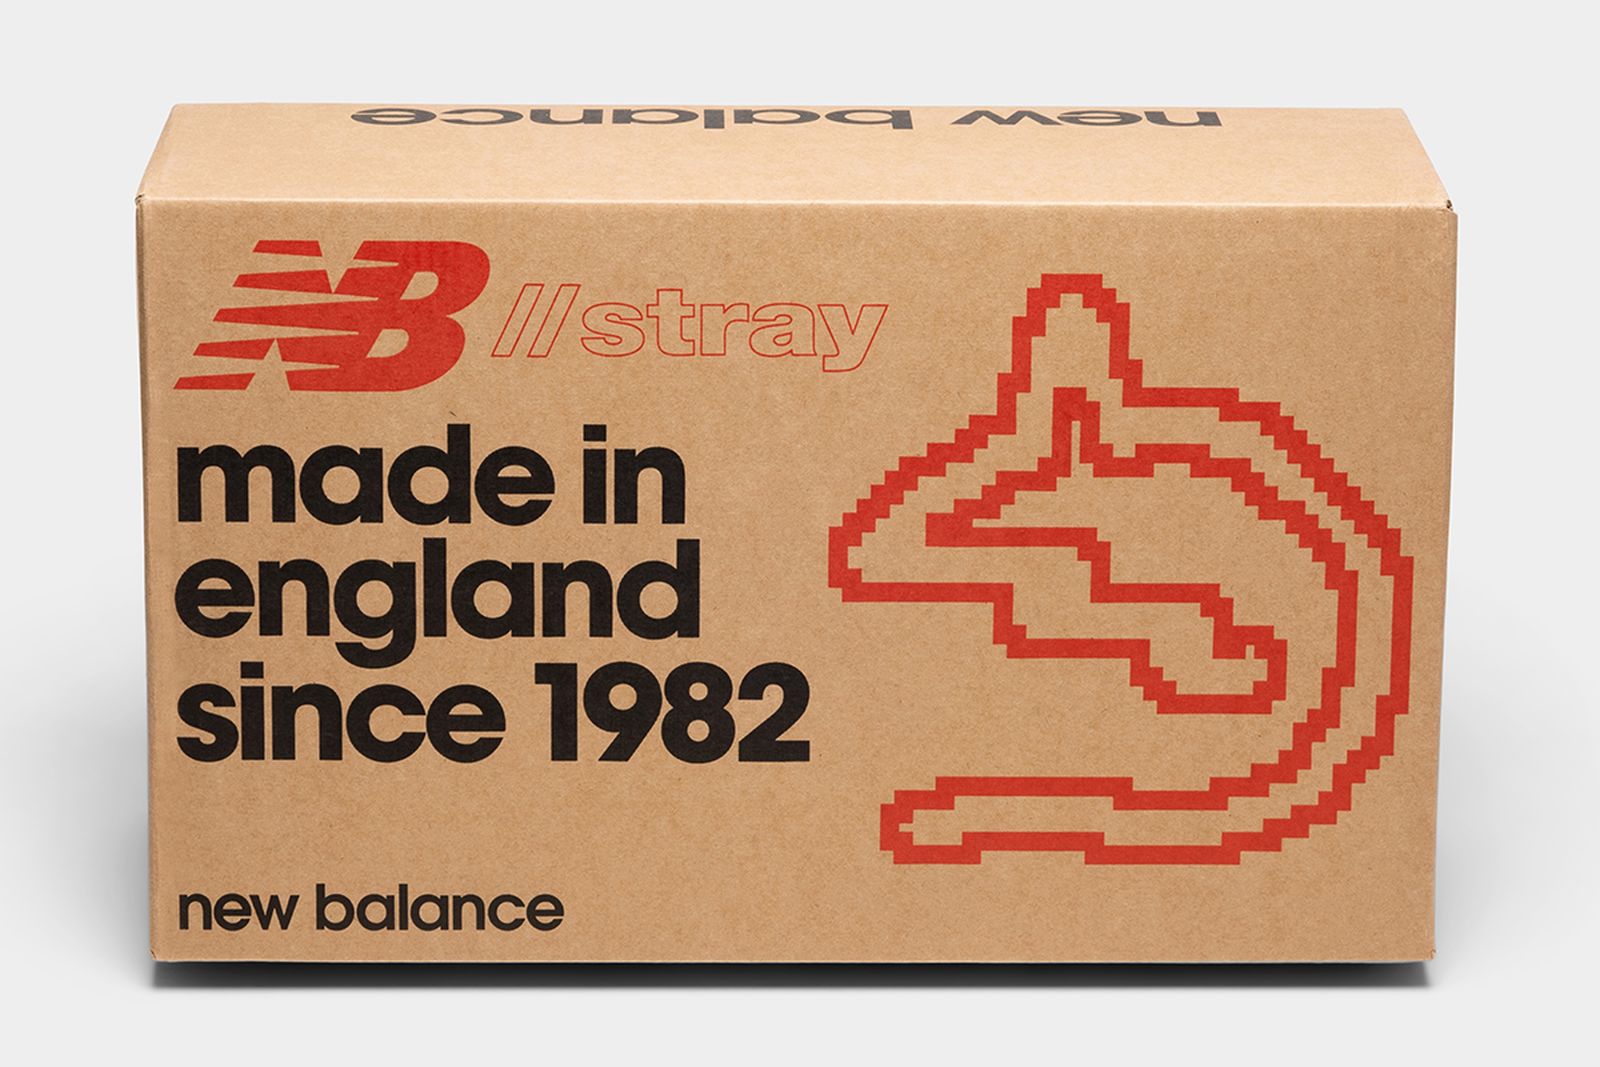 stray-balance-new-balance-991-release-date-price (5)